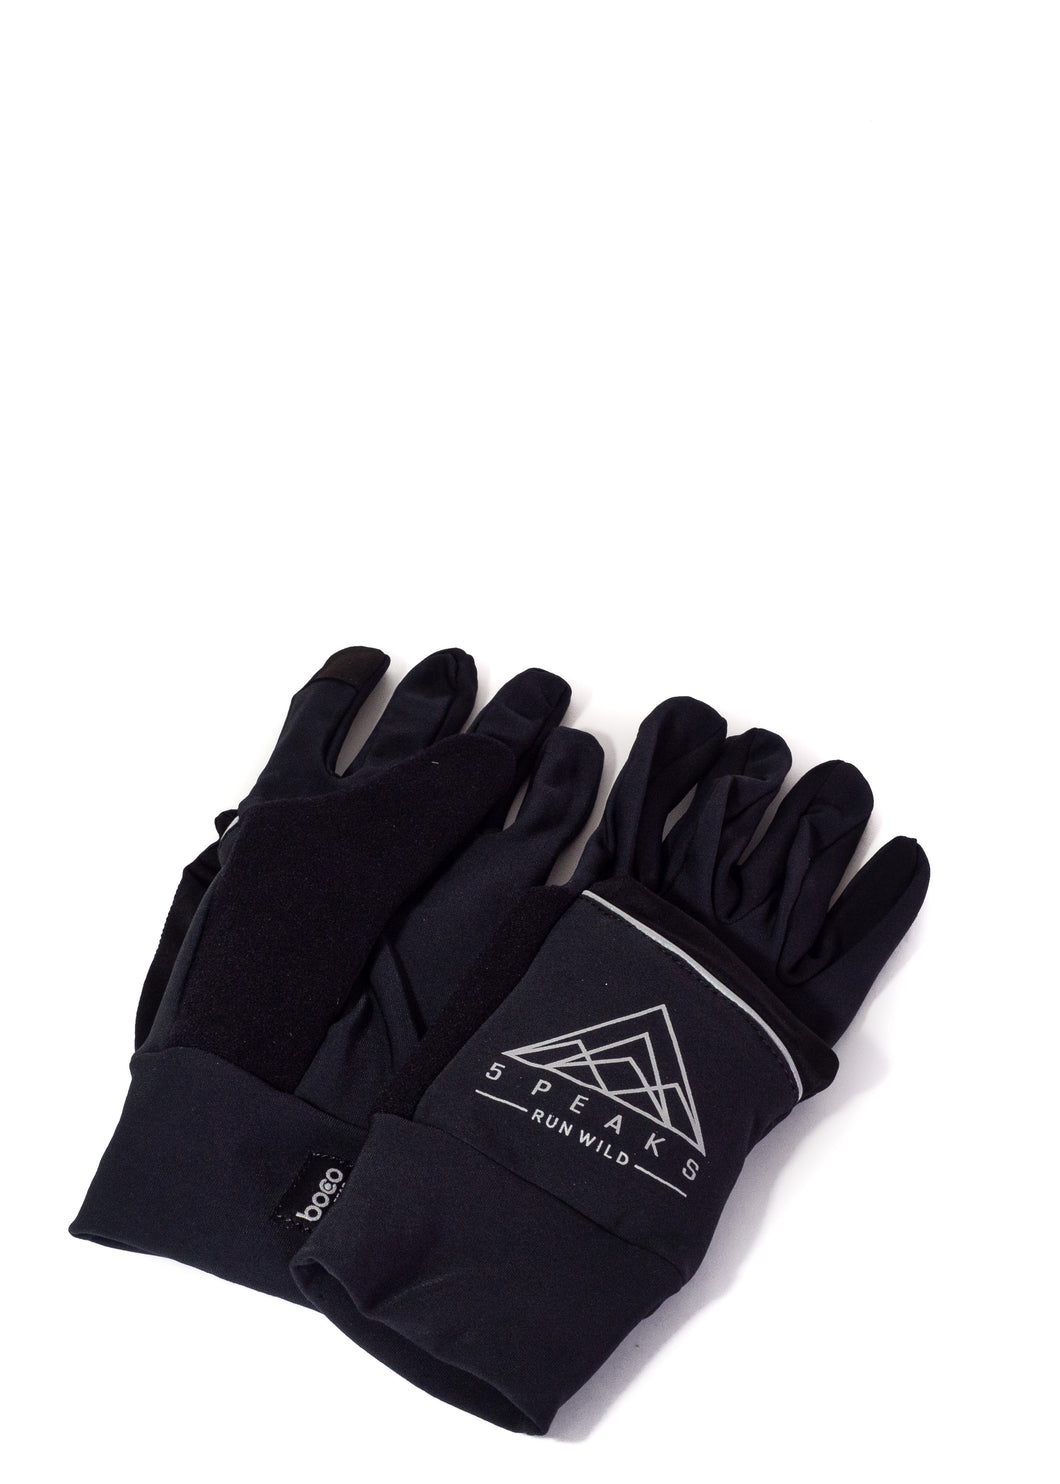 5 Peaks BOCO Convertible Gloves